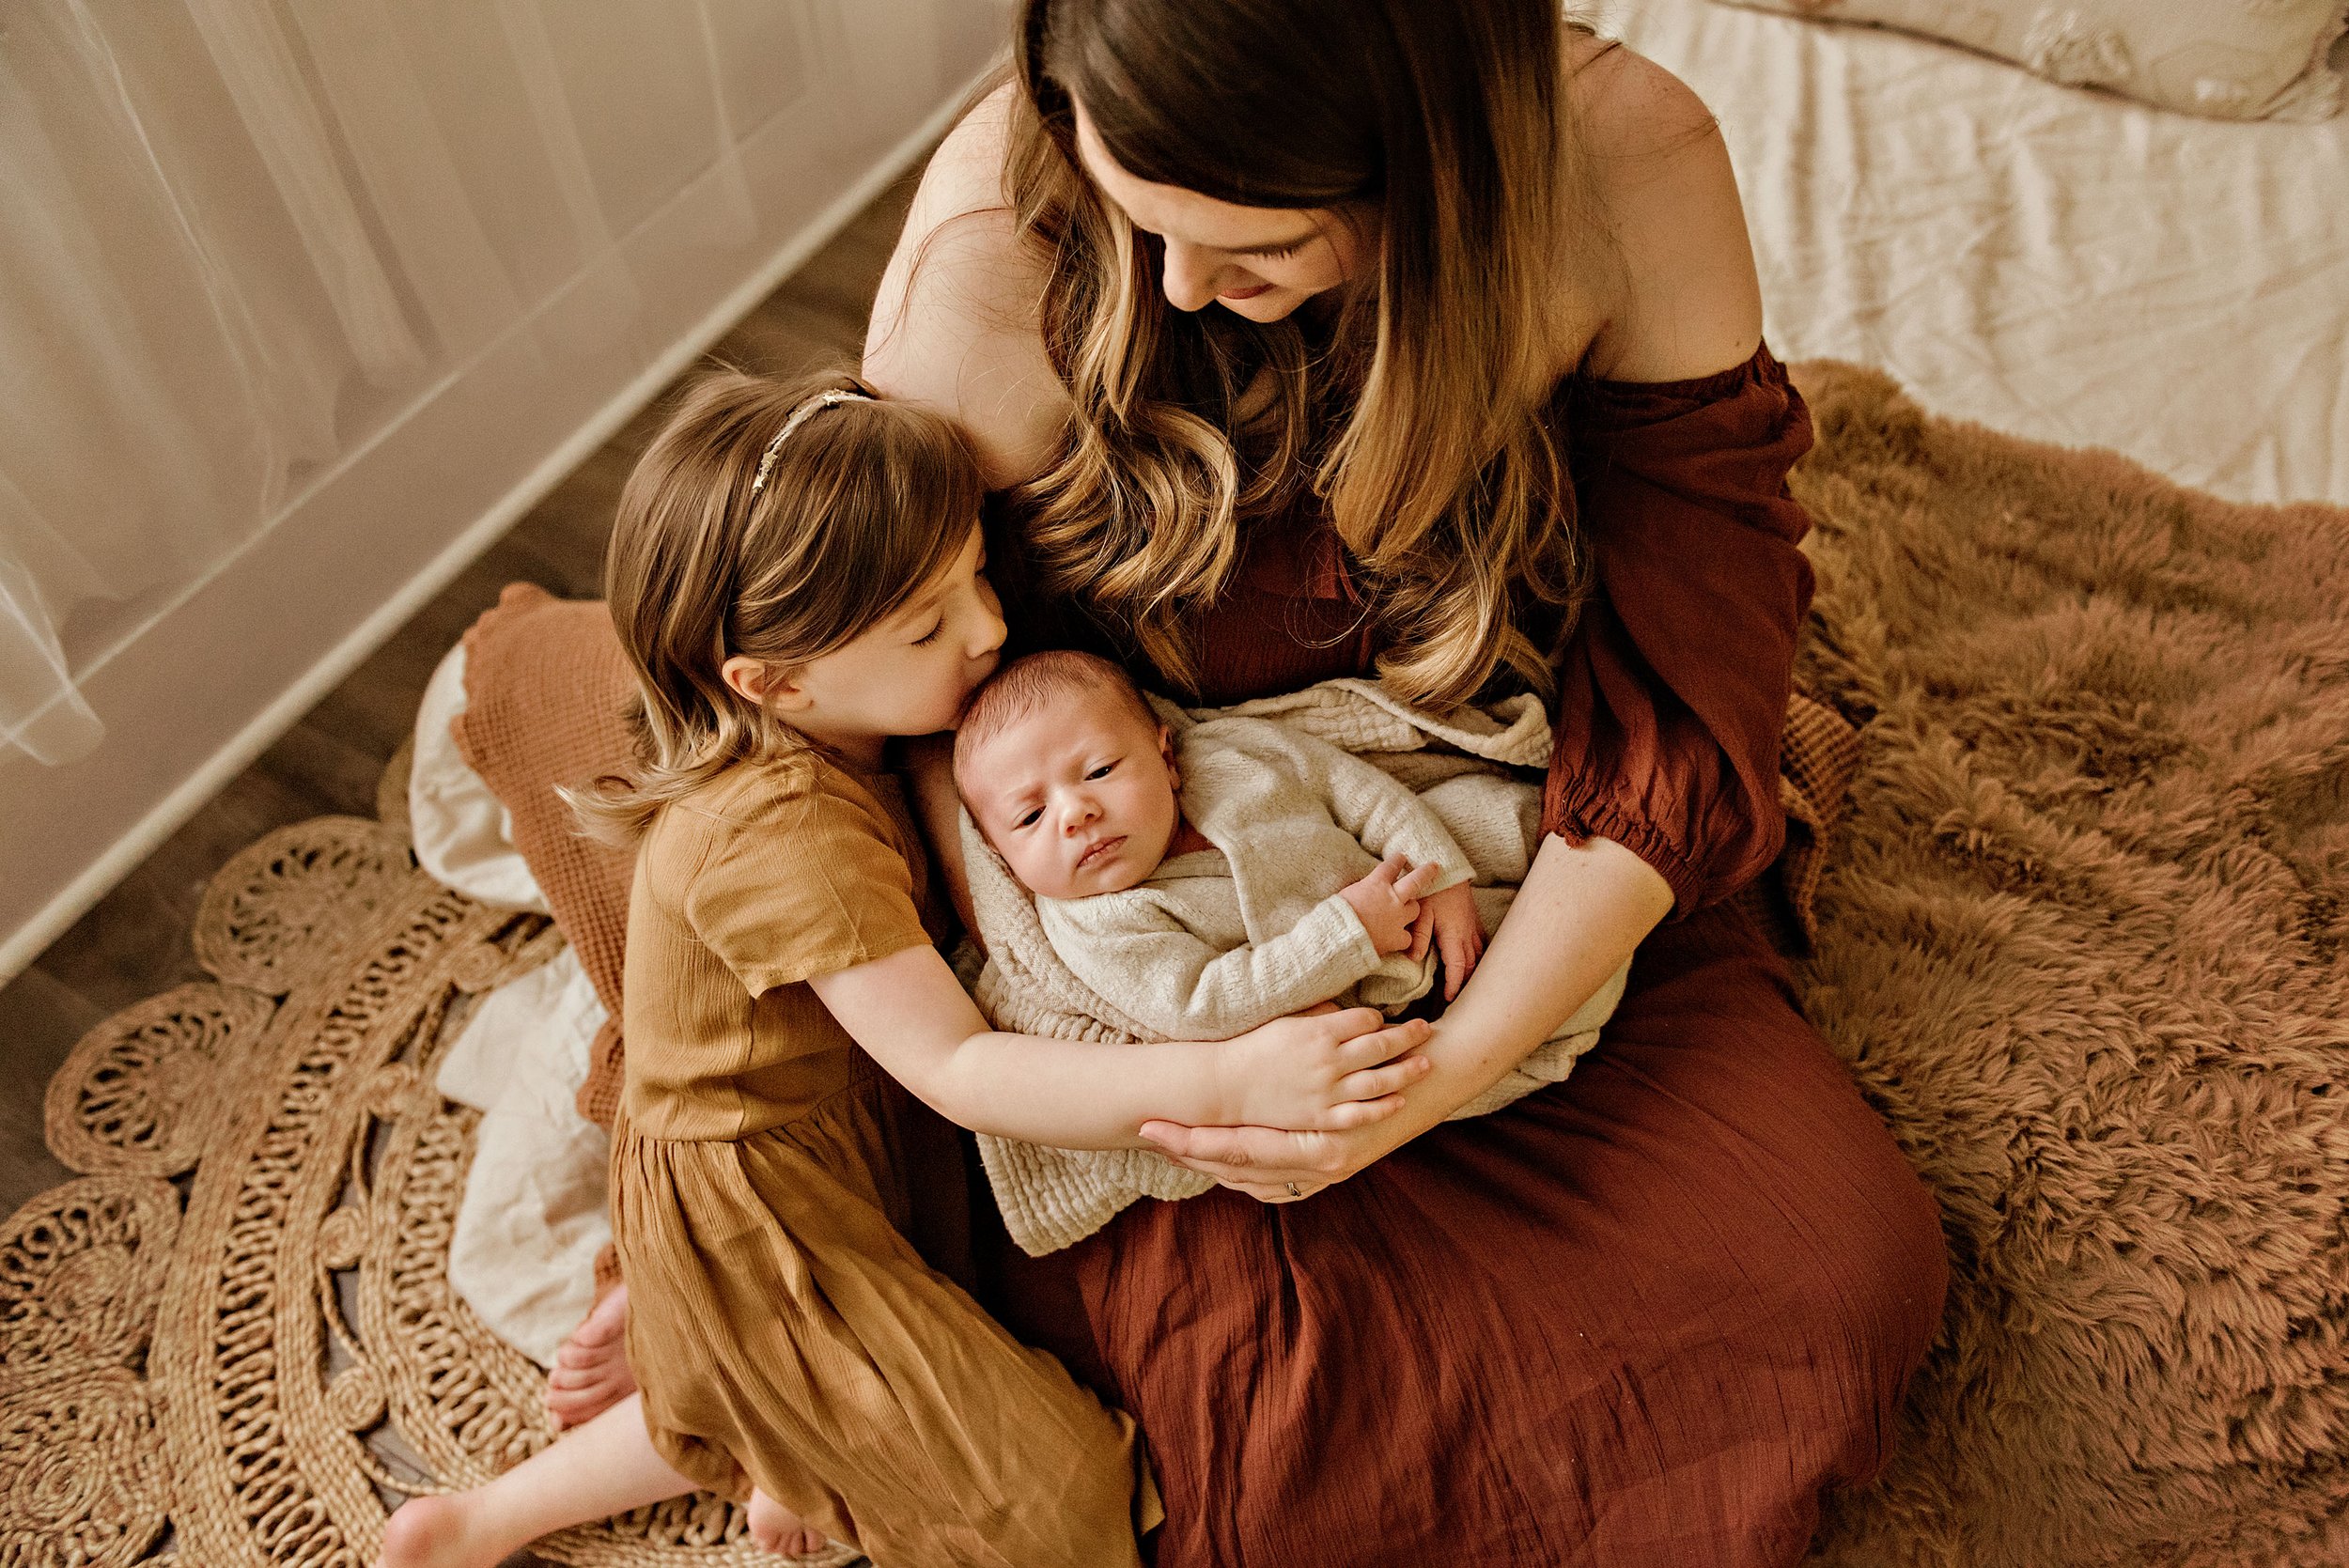 cleveland-ohio-newborn-photographer-lauren-grayson-studio-baby-family-photo-session11.jpg